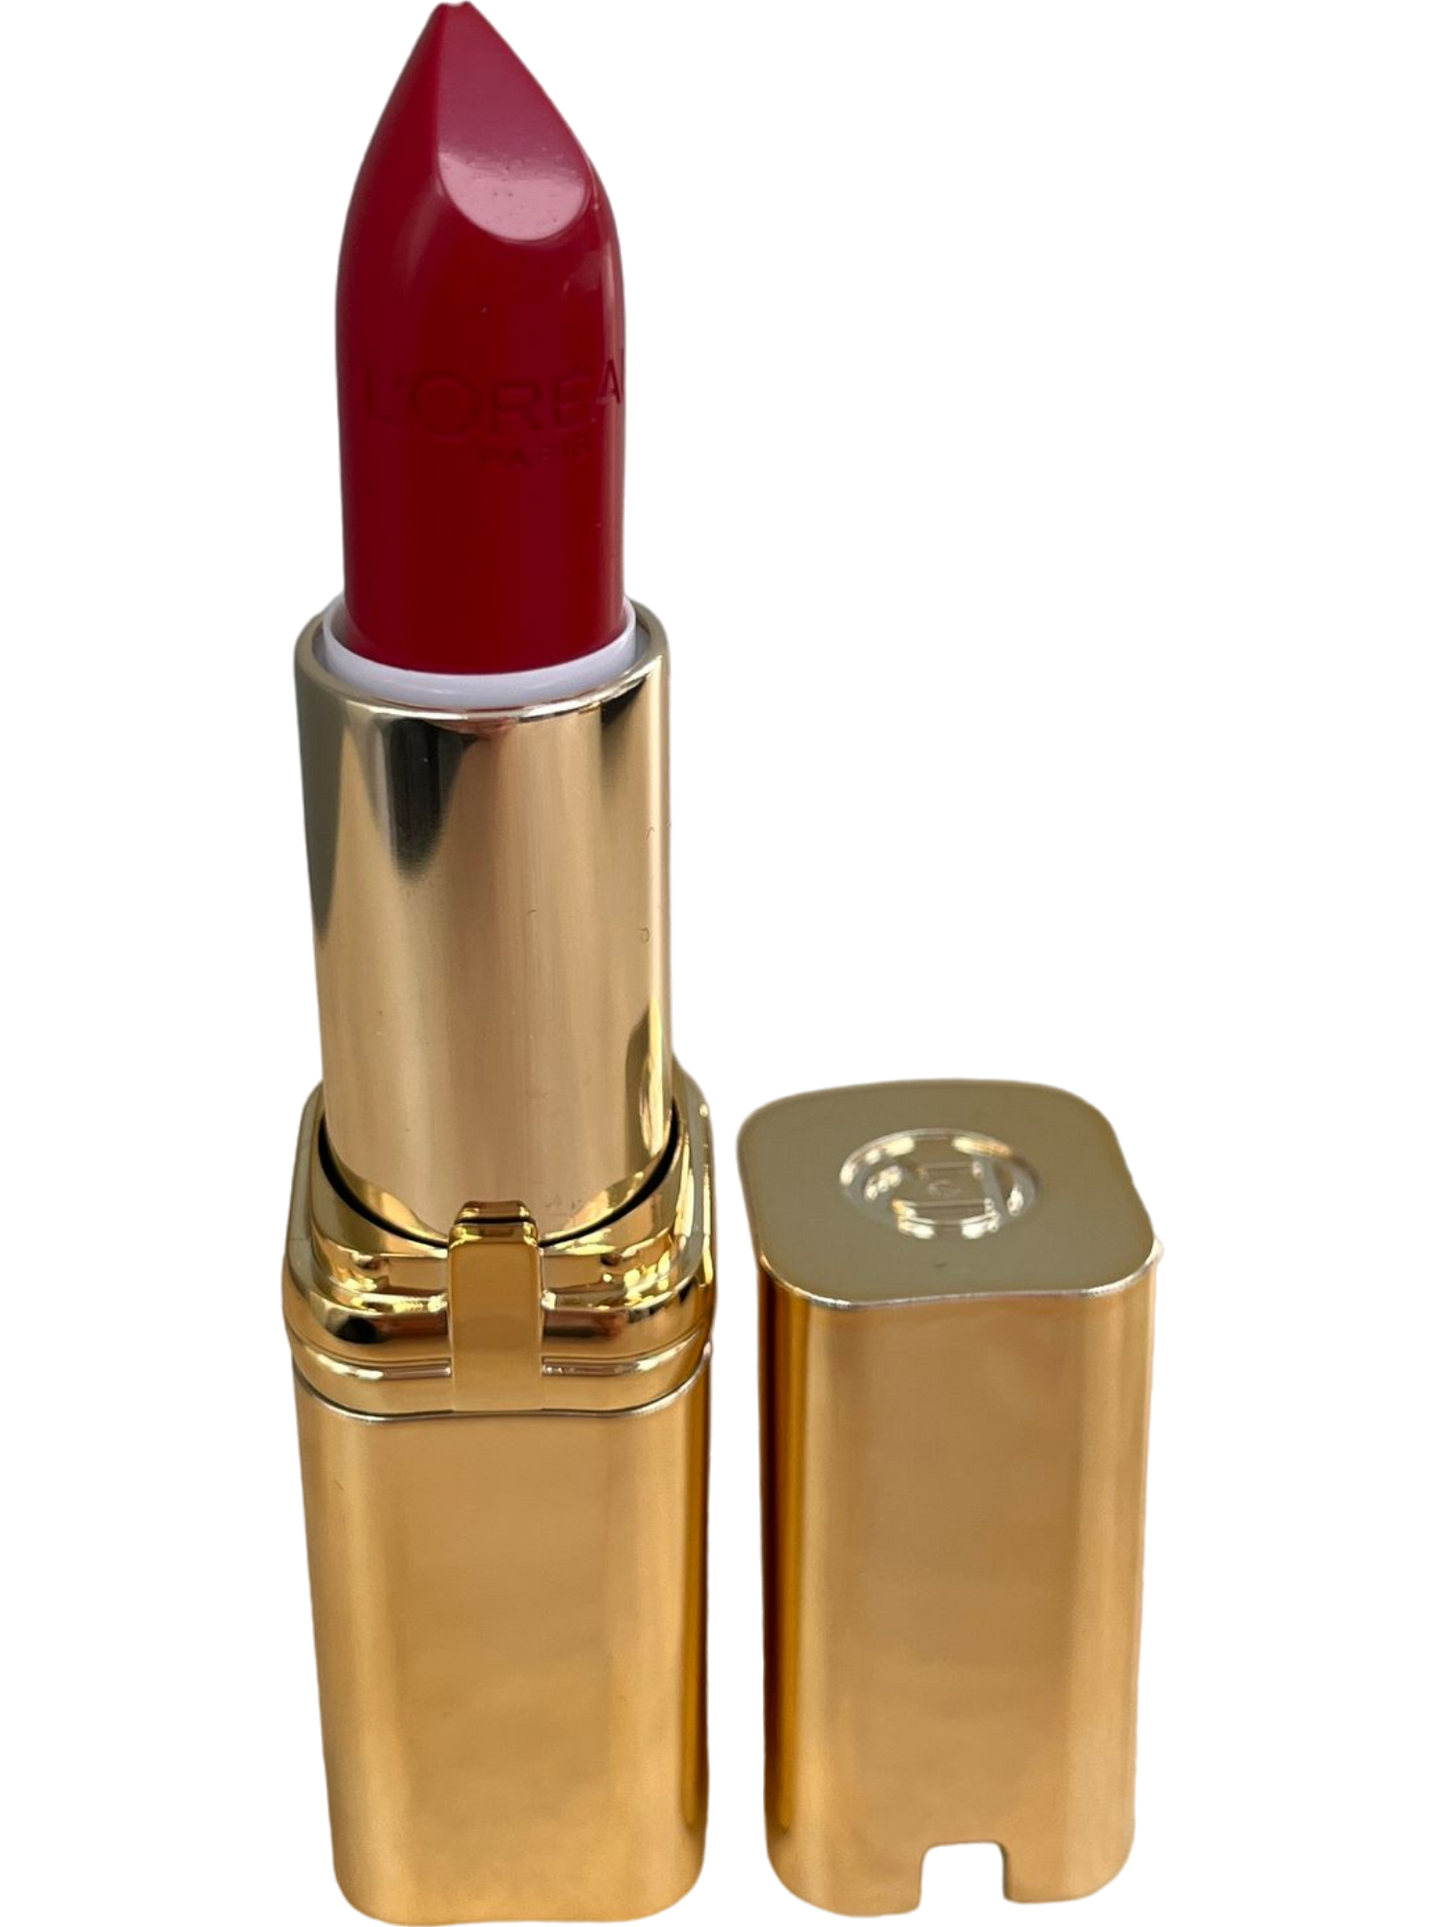 L'Oreal Paris Colour Riche Lipstick in Maison Marais 125 Red Classic Nourishing Lip Colour